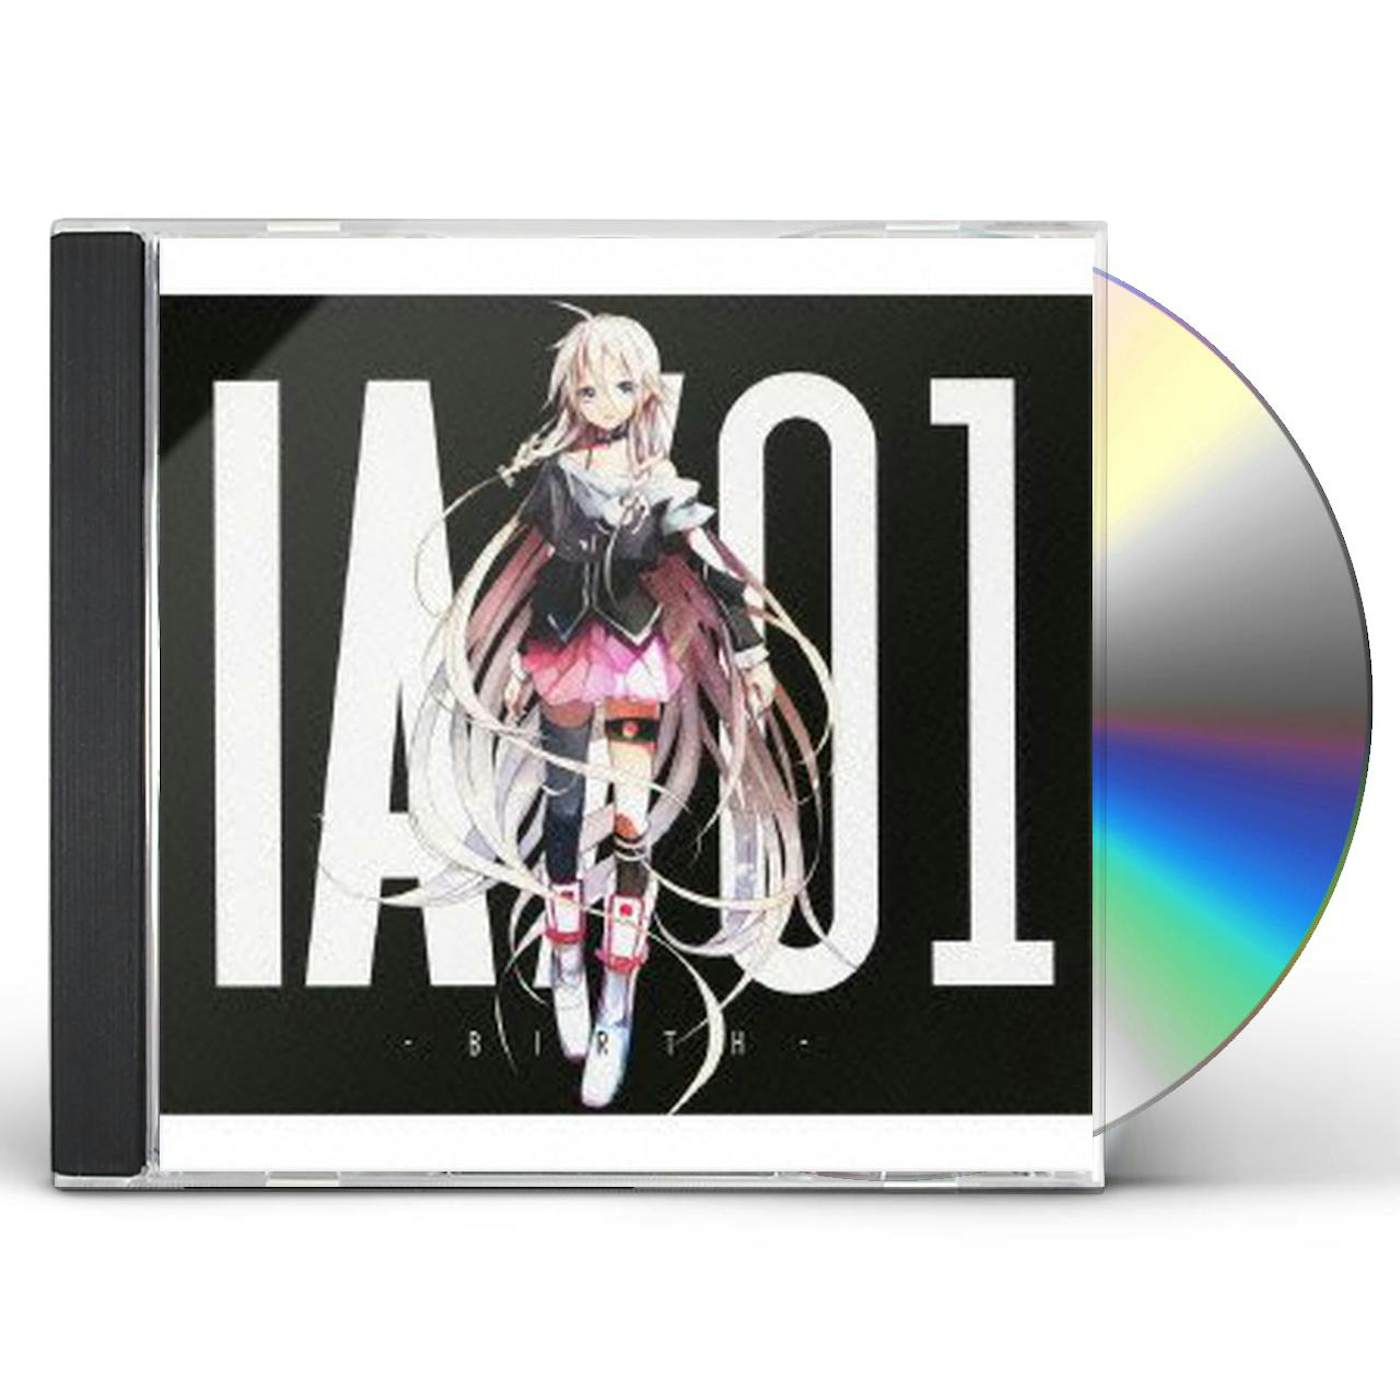 IA01: BIRTH CD